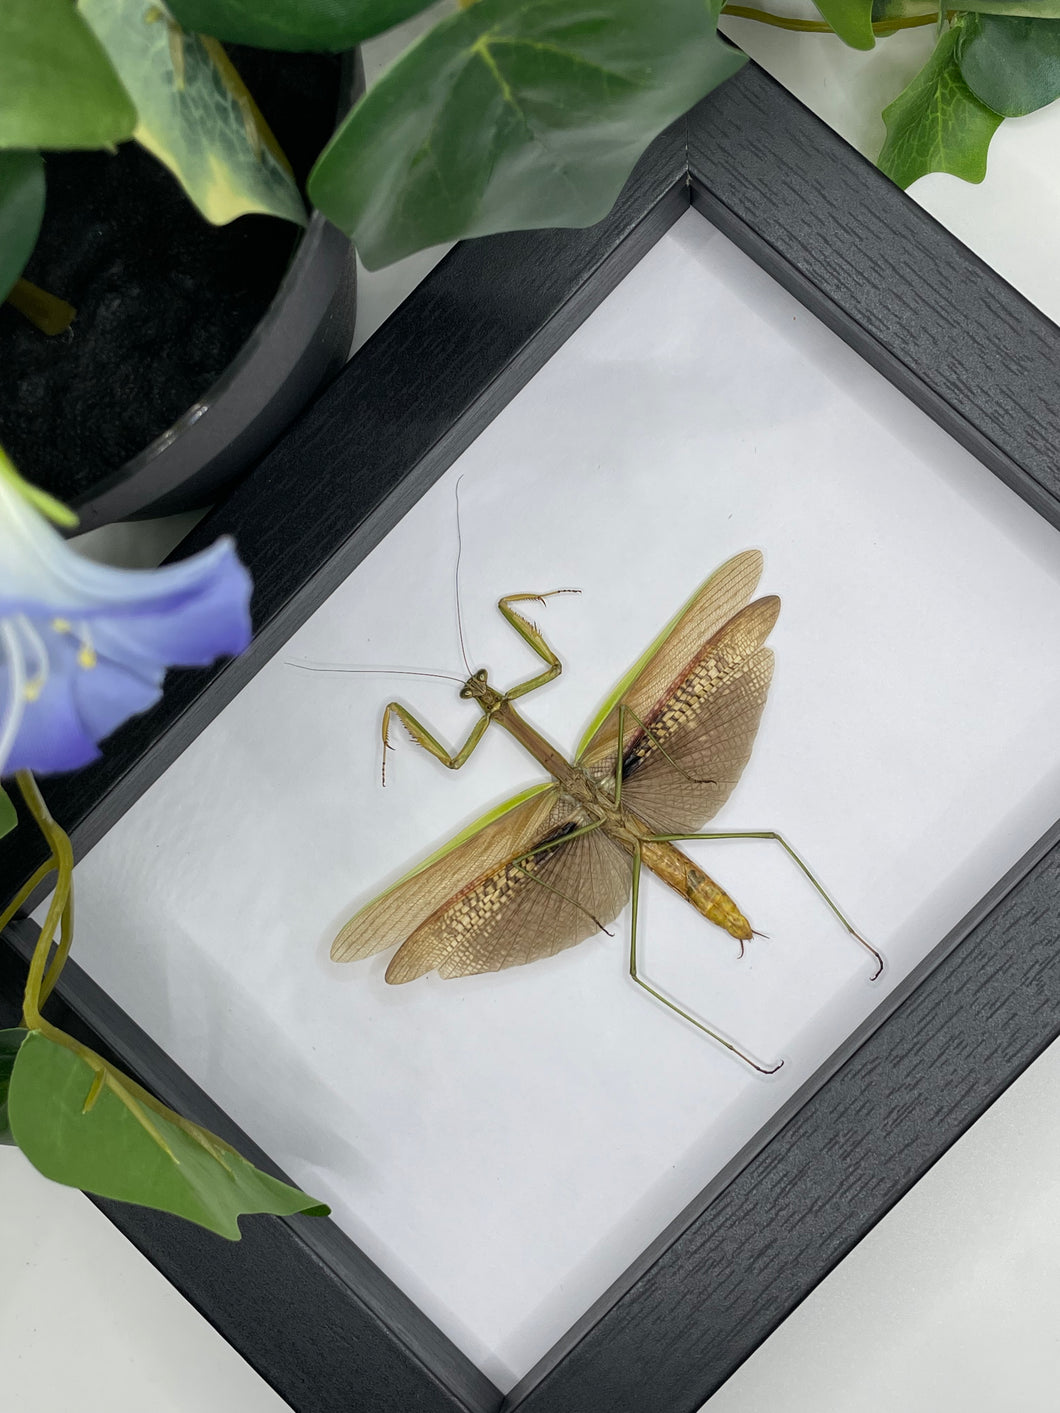 Mantis sp. / Tenodera aridifolia in a frame